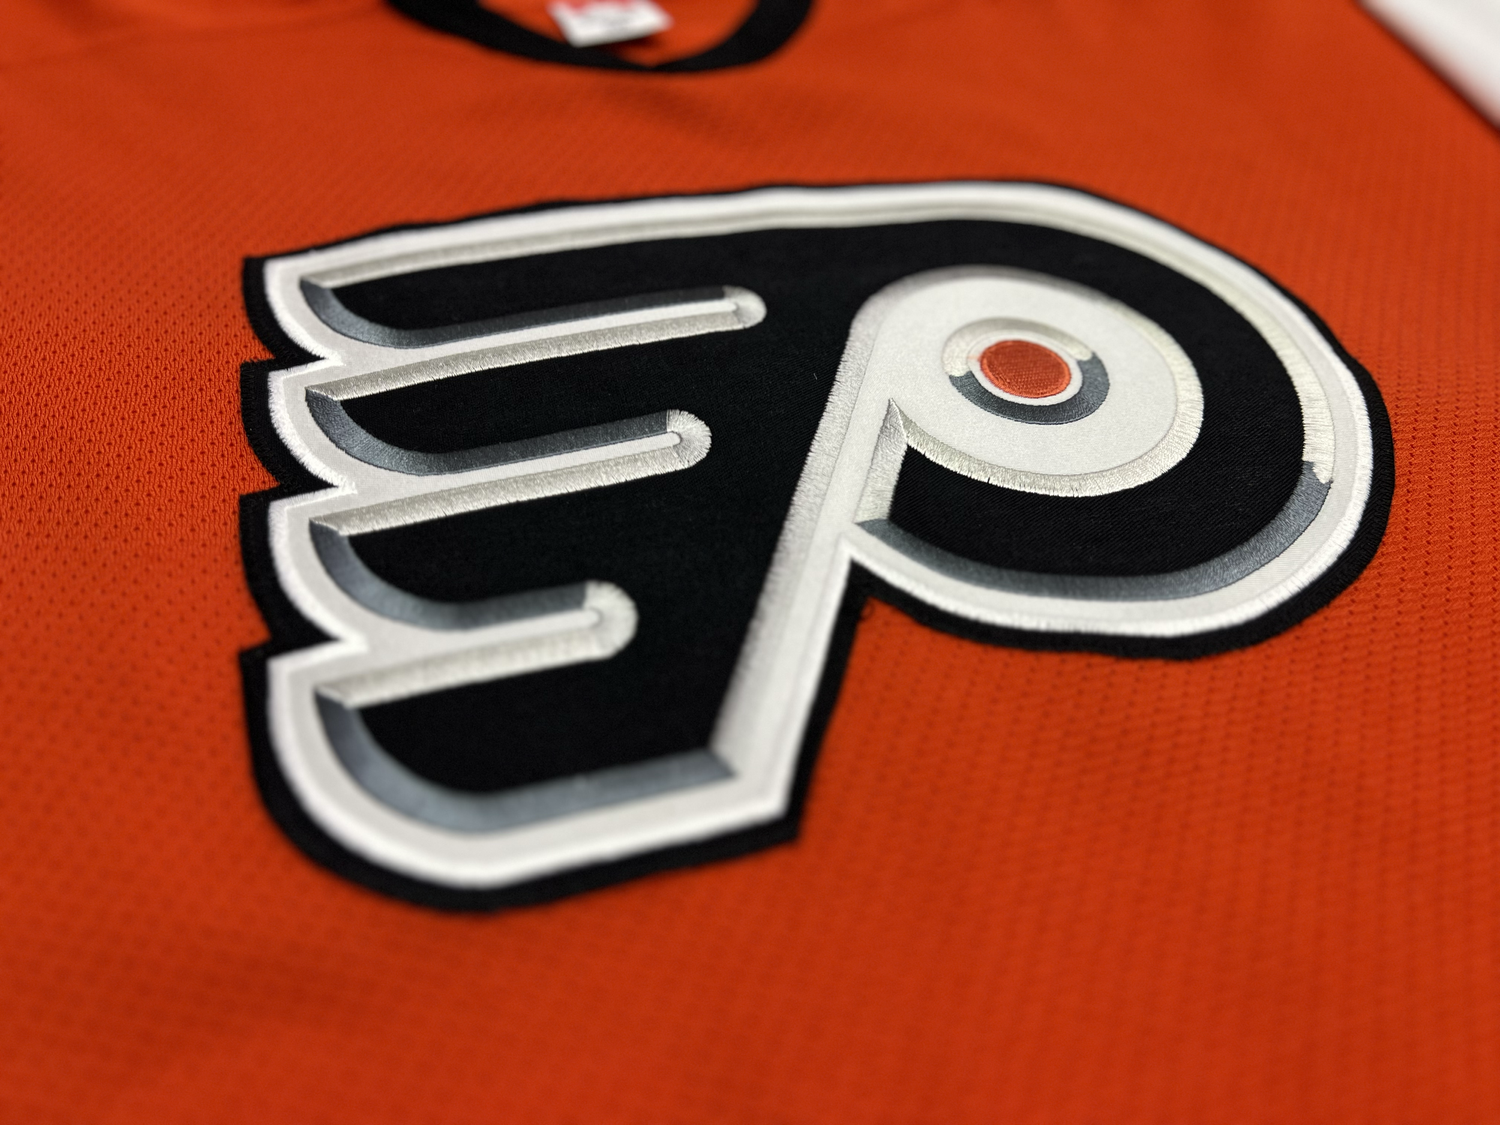 Scott Laughton Philadelphia Flyers Game worn 2021-22 Set 2 Third Jersey —  Liberty Bell Jerseys